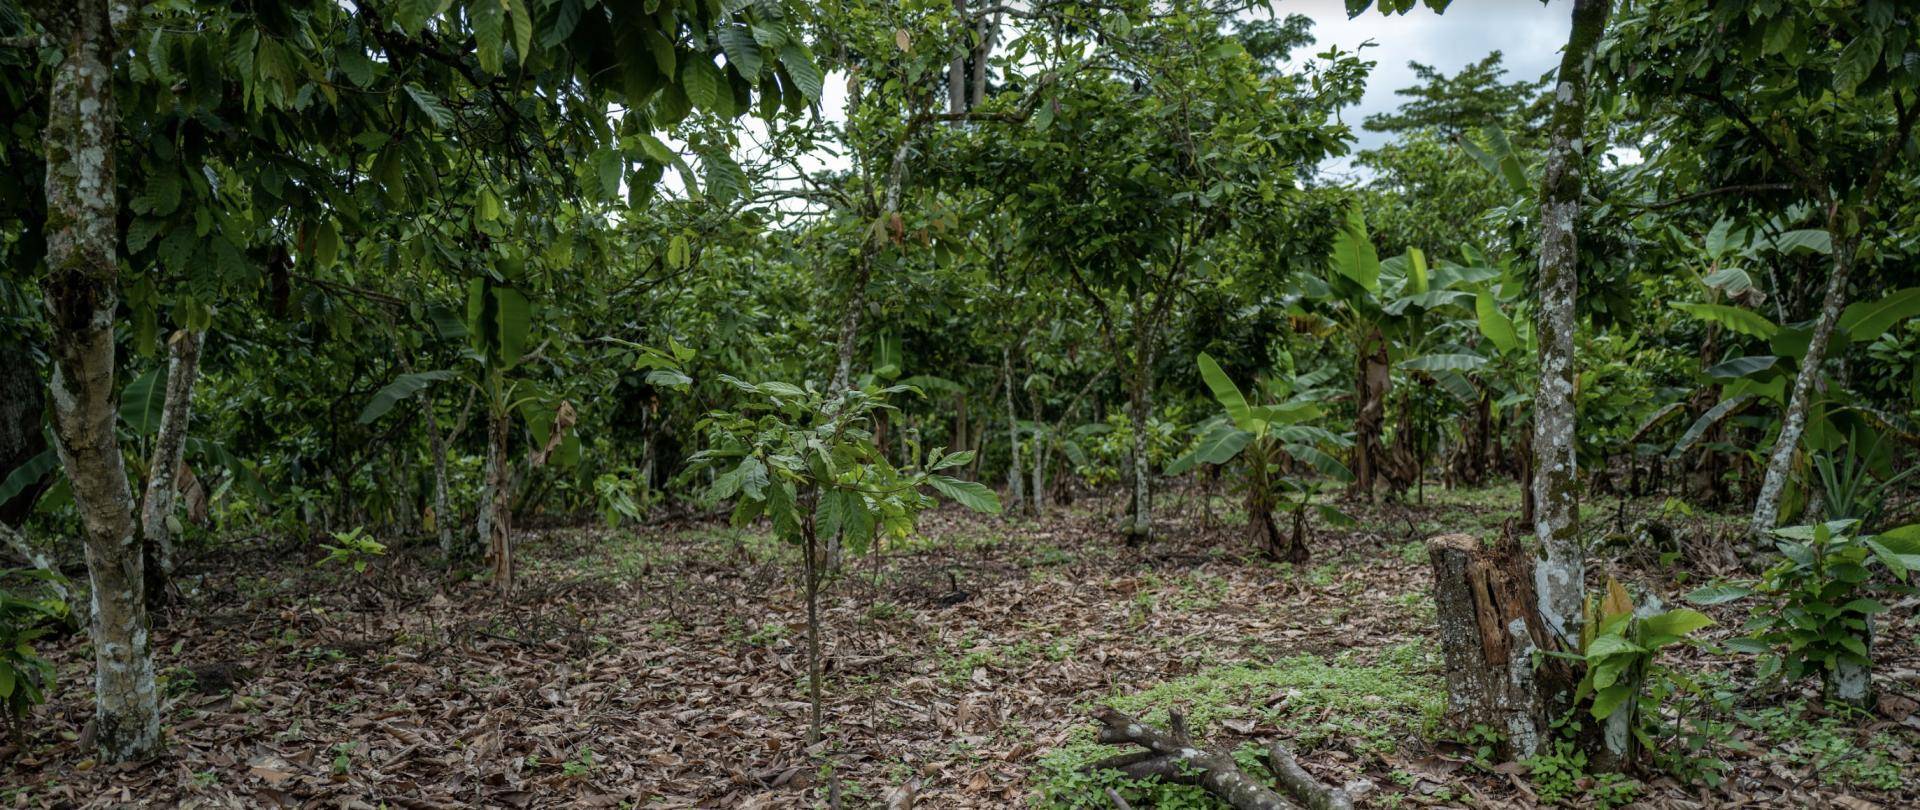 Thriving Nature 2022 sustainability Barry Callebaut